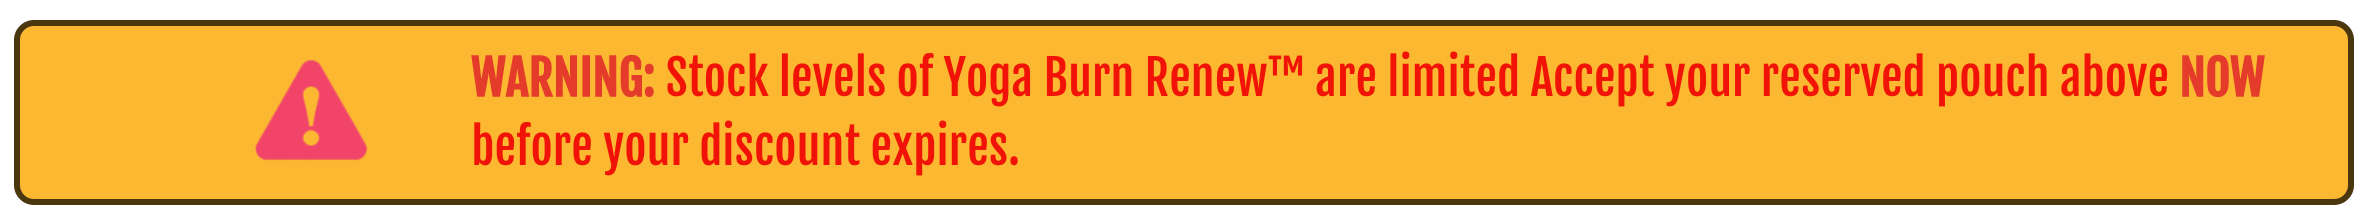 Yoga Burn Renew